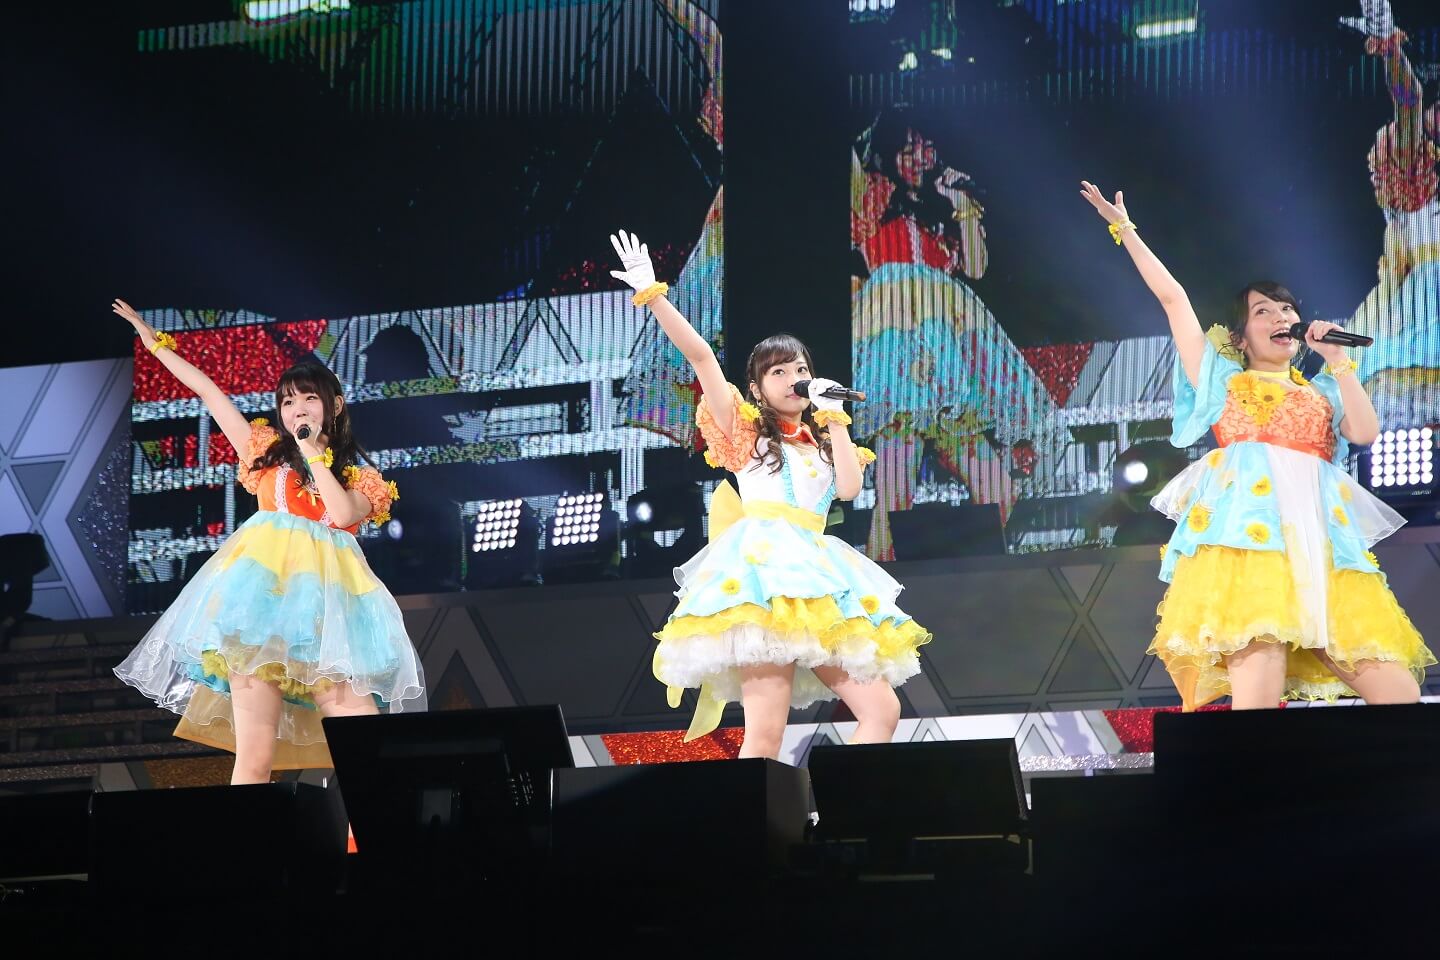 Tokyo 7th シスターズ 2daysの4th Anniversary Liveを幕張メッセにて開催 2日目公演も大熱狂 Akiba S Gate